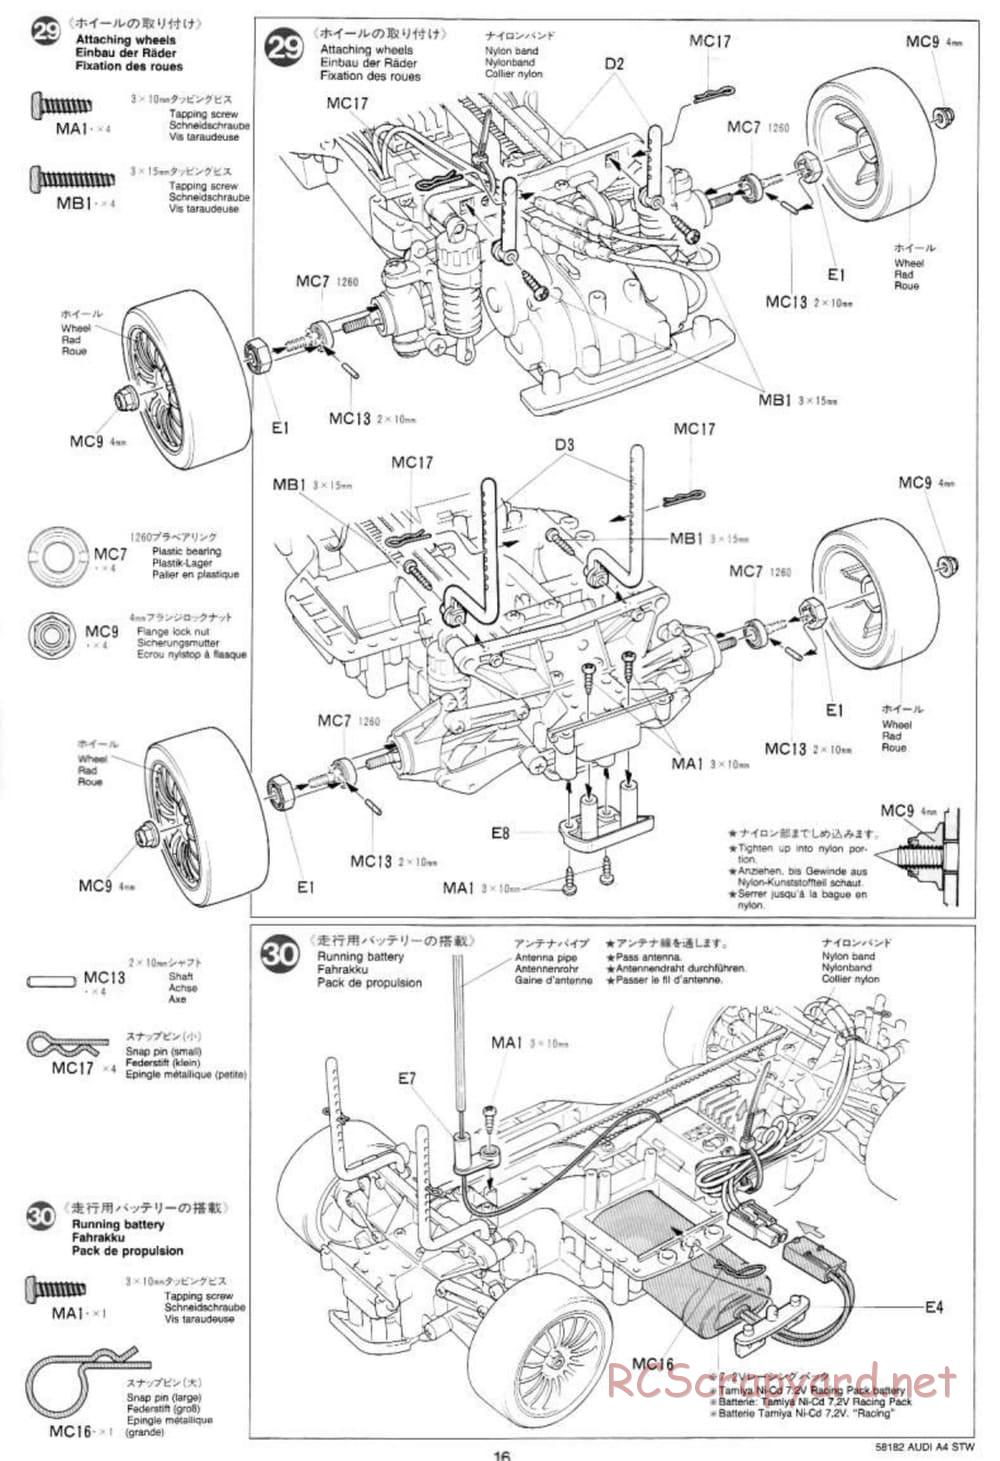 Tamiya - Audi A4 STW - TA-03F Chassis - Manual - Page 16